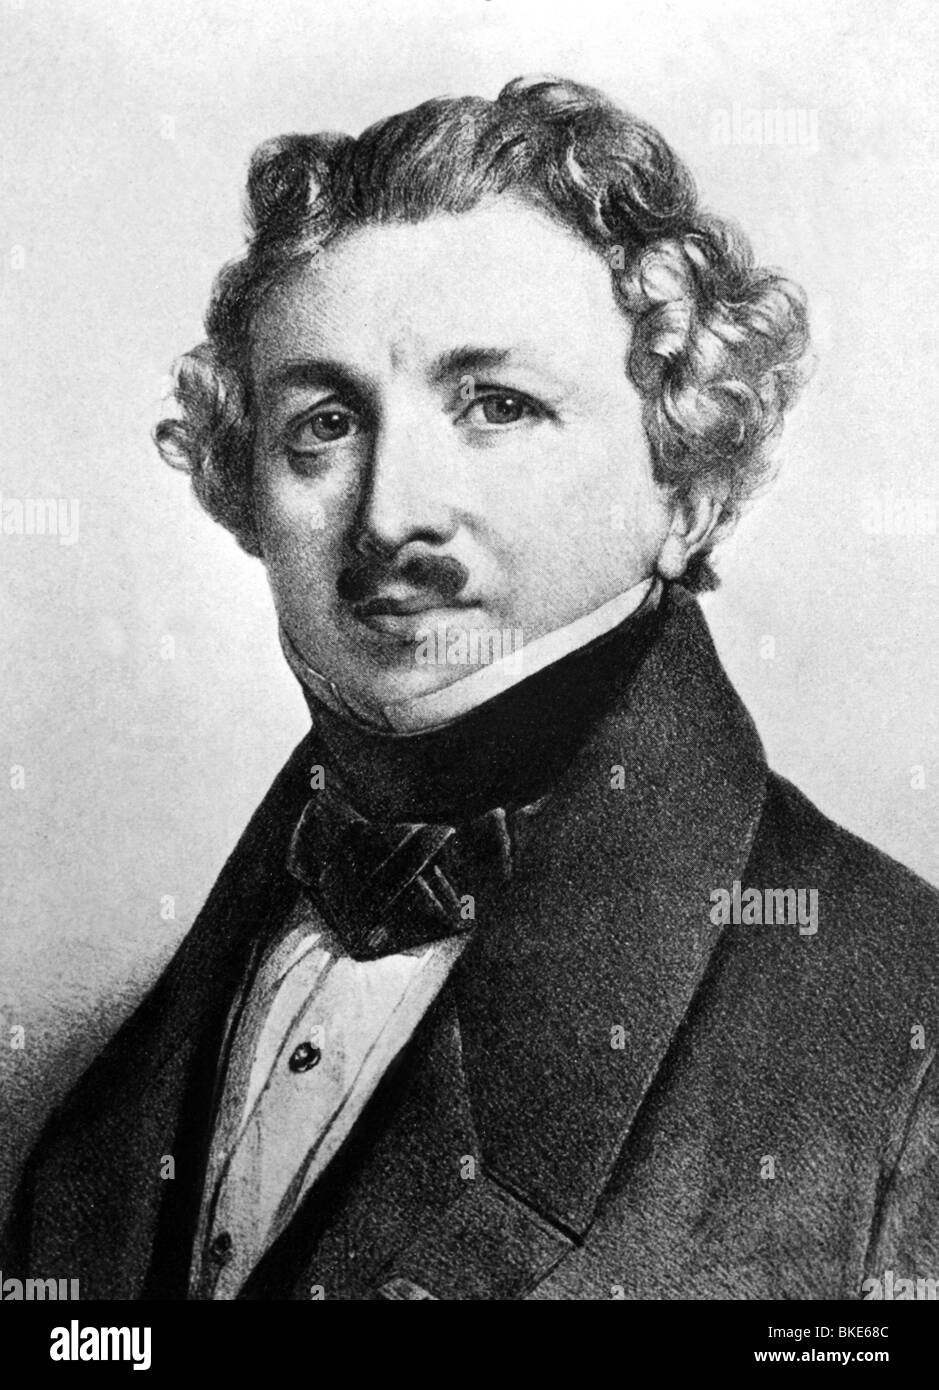 Daguerre, Louis Jacques, 18.11.1789 - 10.7.1851, French painter, inventor, portrait,   lithograph by Grevedon, 19th century, Stock Photo